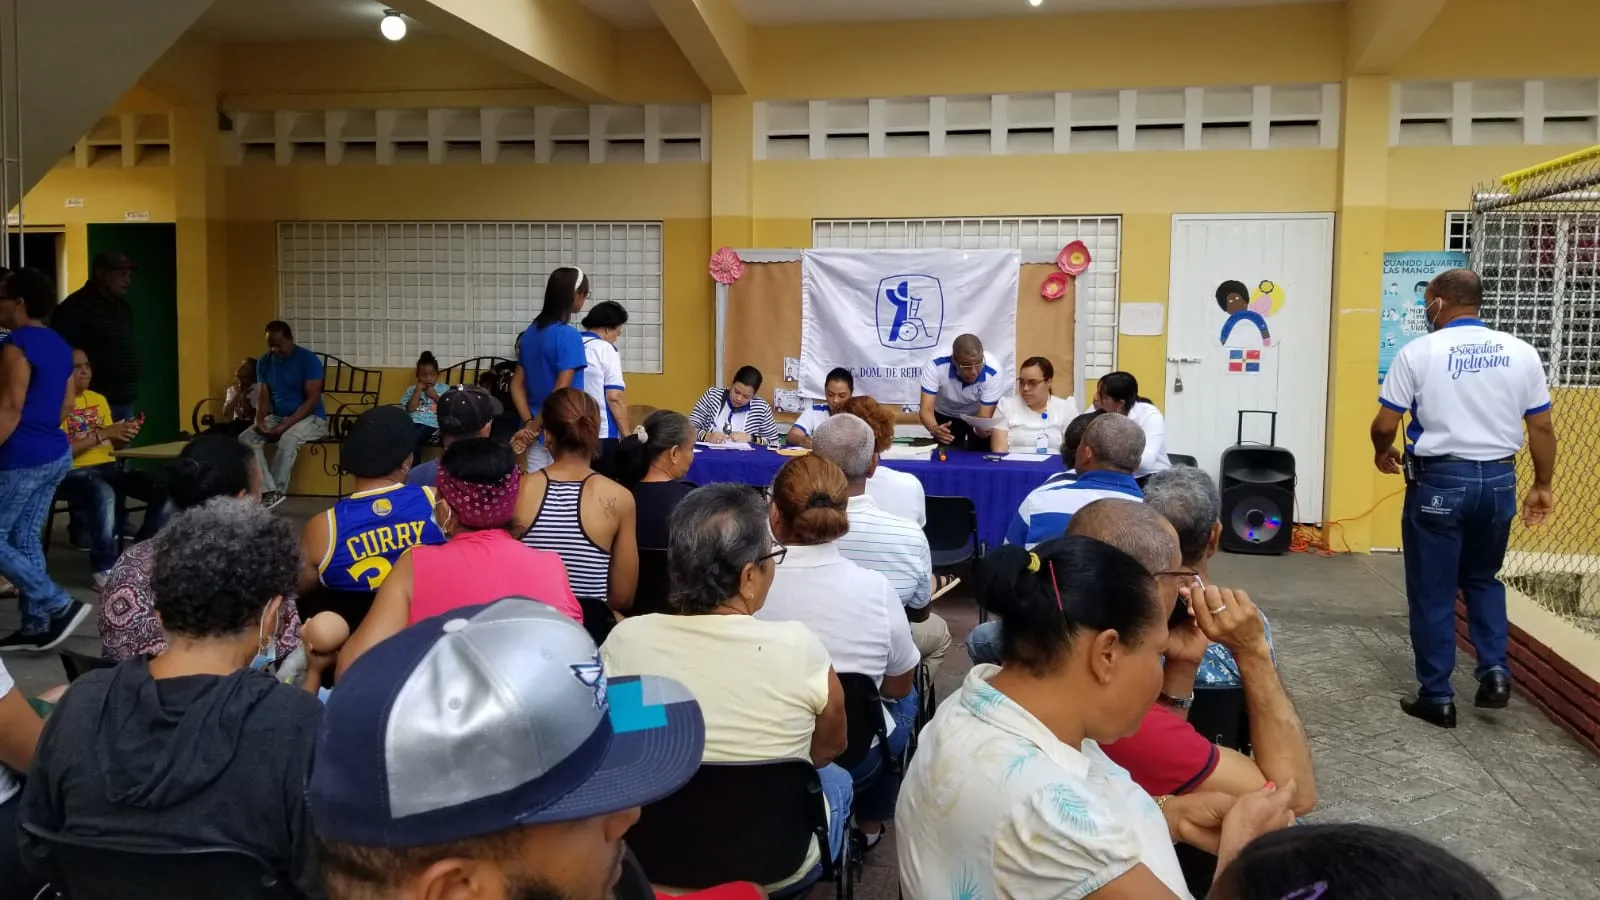 Asociación Dominicana de Rehabilitación sirve a cientos de personas en jornada especial